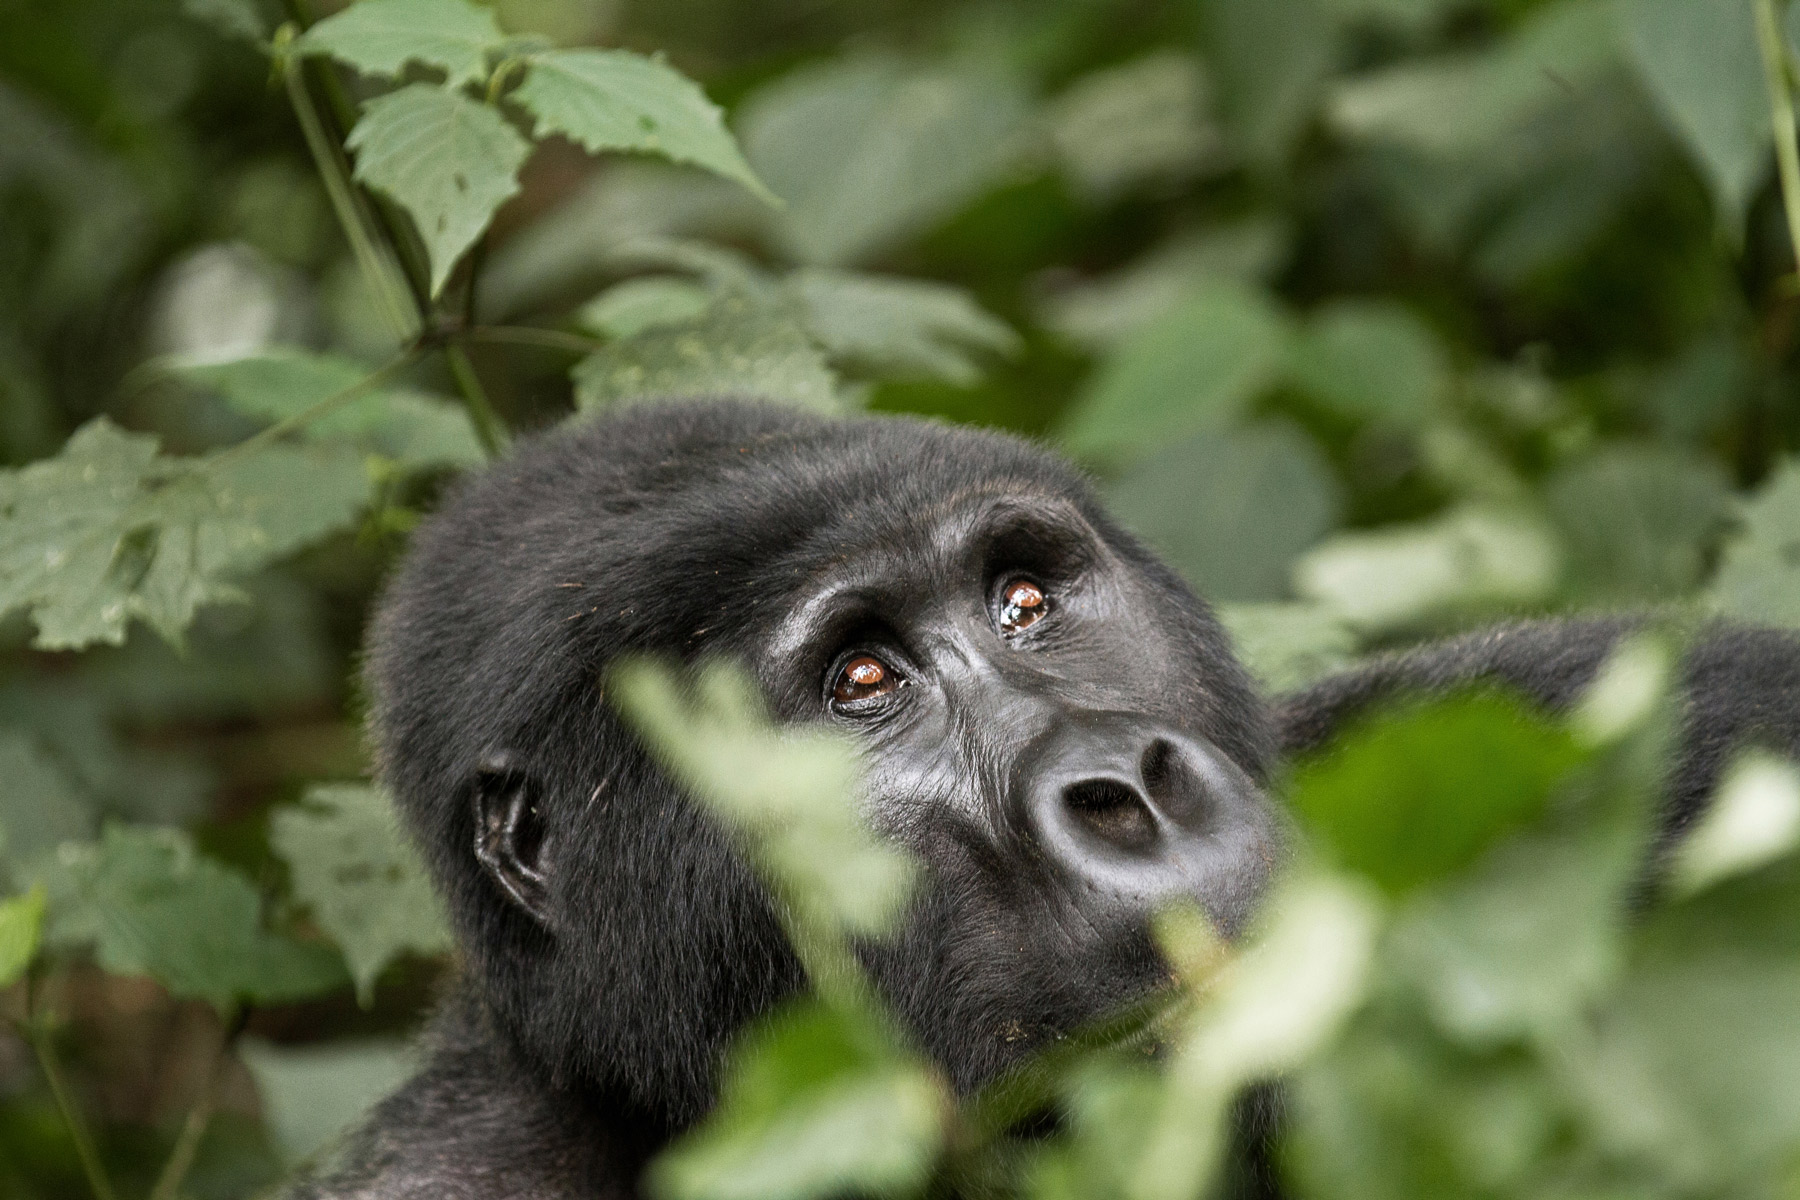 A gorilla looking upwards